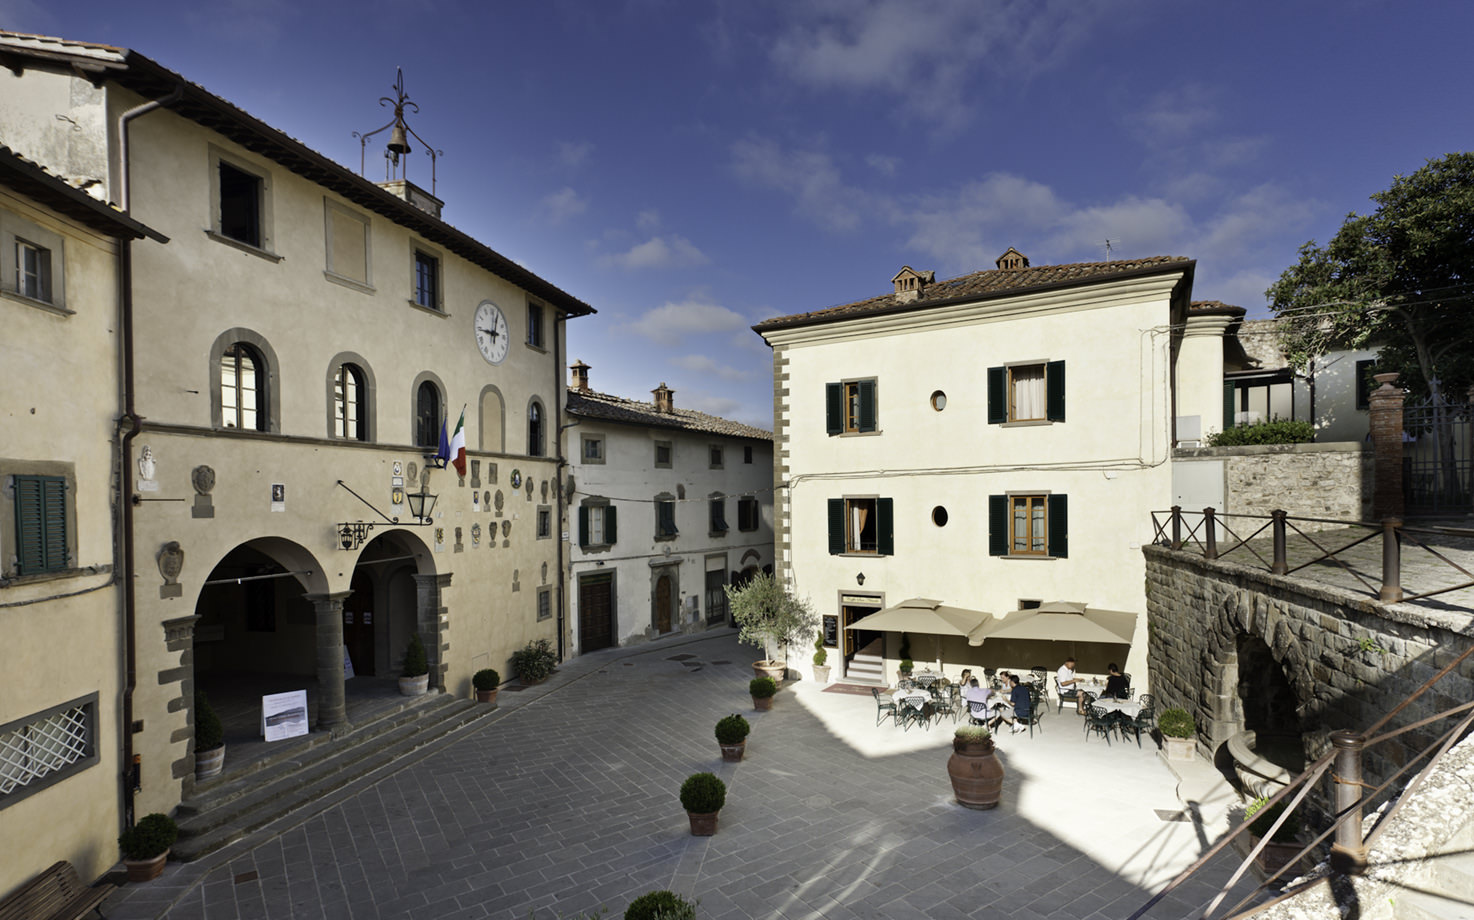 Radda in Chianti Town Hall